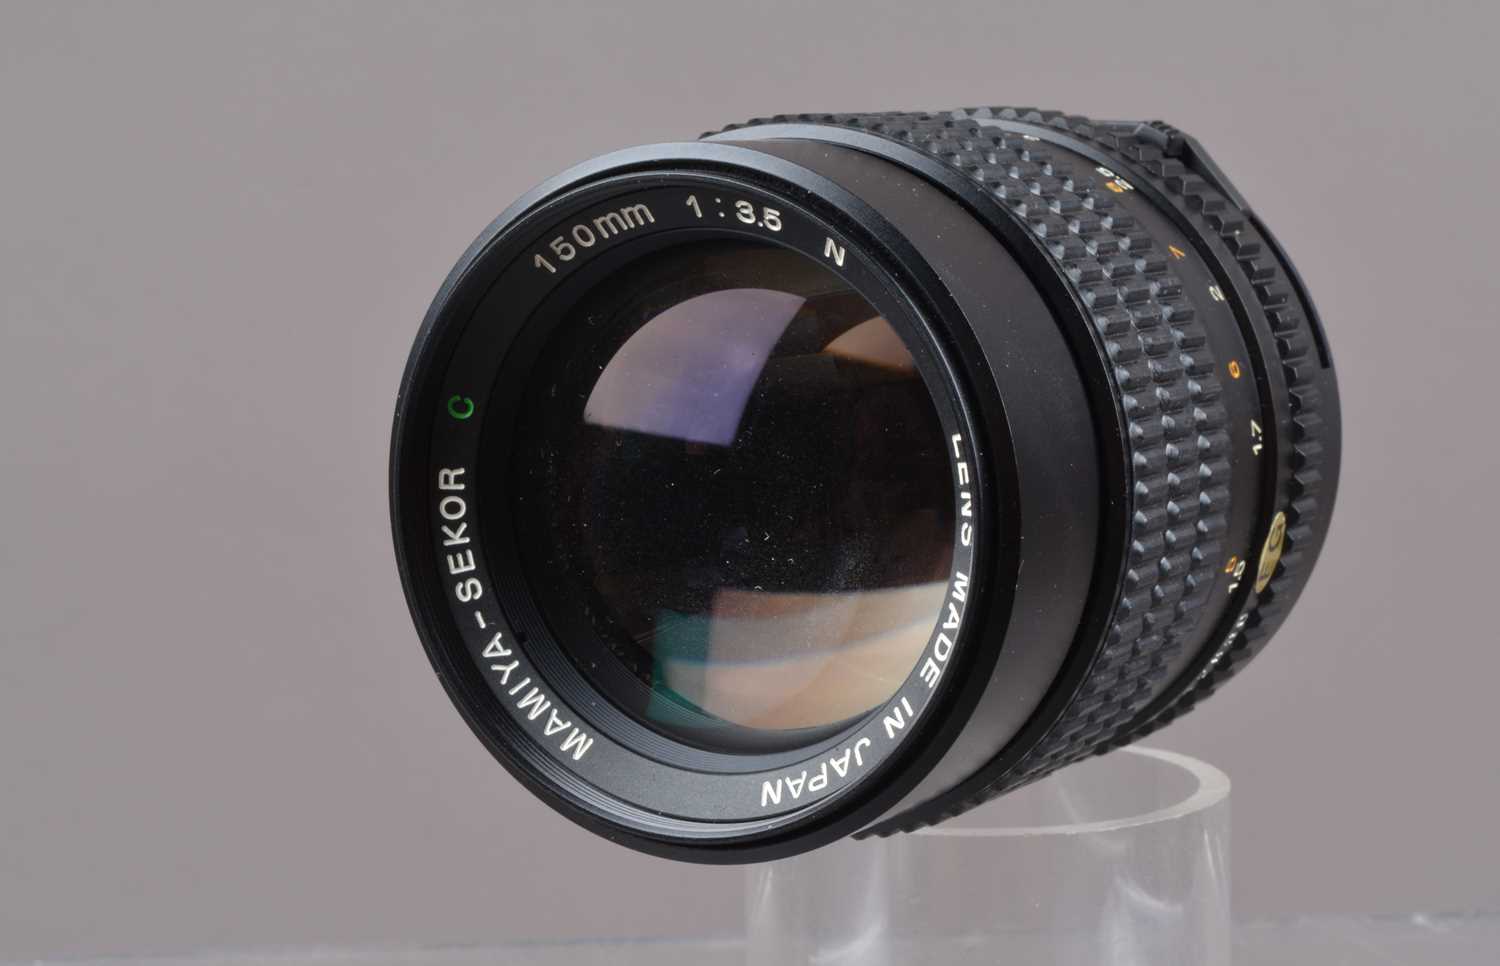 Lot 90 - A Mamiya-Sekor C 150mm f/3.5 N Lens